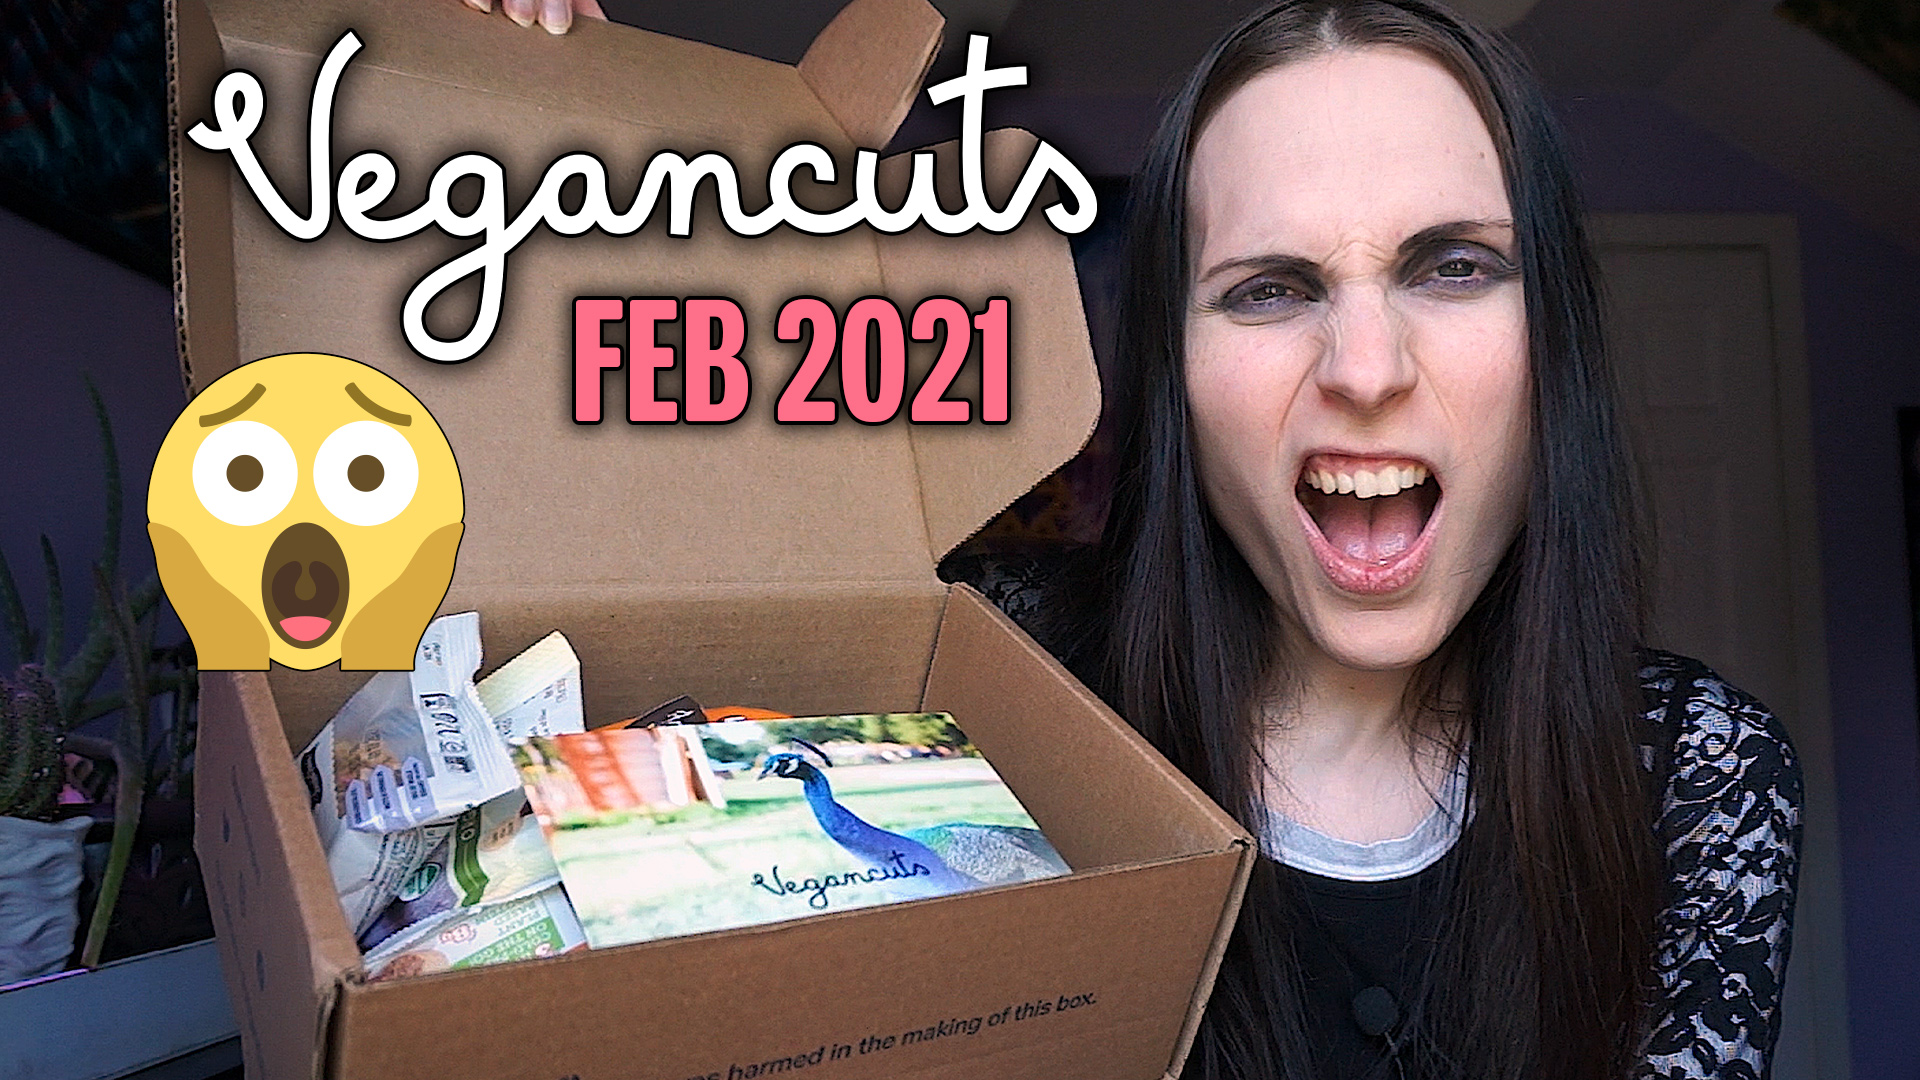 Vegancuts Snack Box February 2021 • Autumn Asphodel